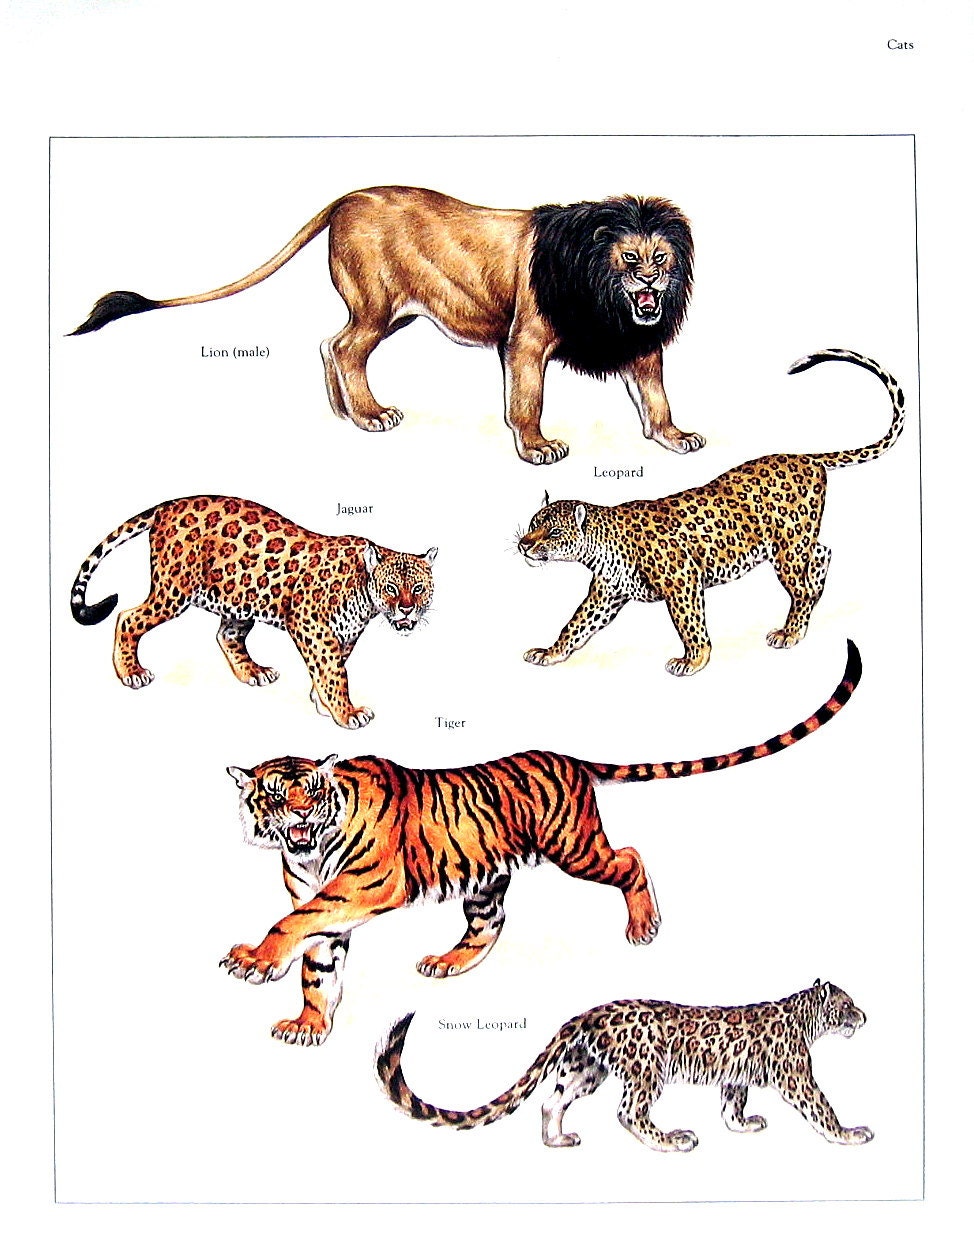 Wild Cats Print Lion Jaguar Leopard Tiger Snow Leapoard